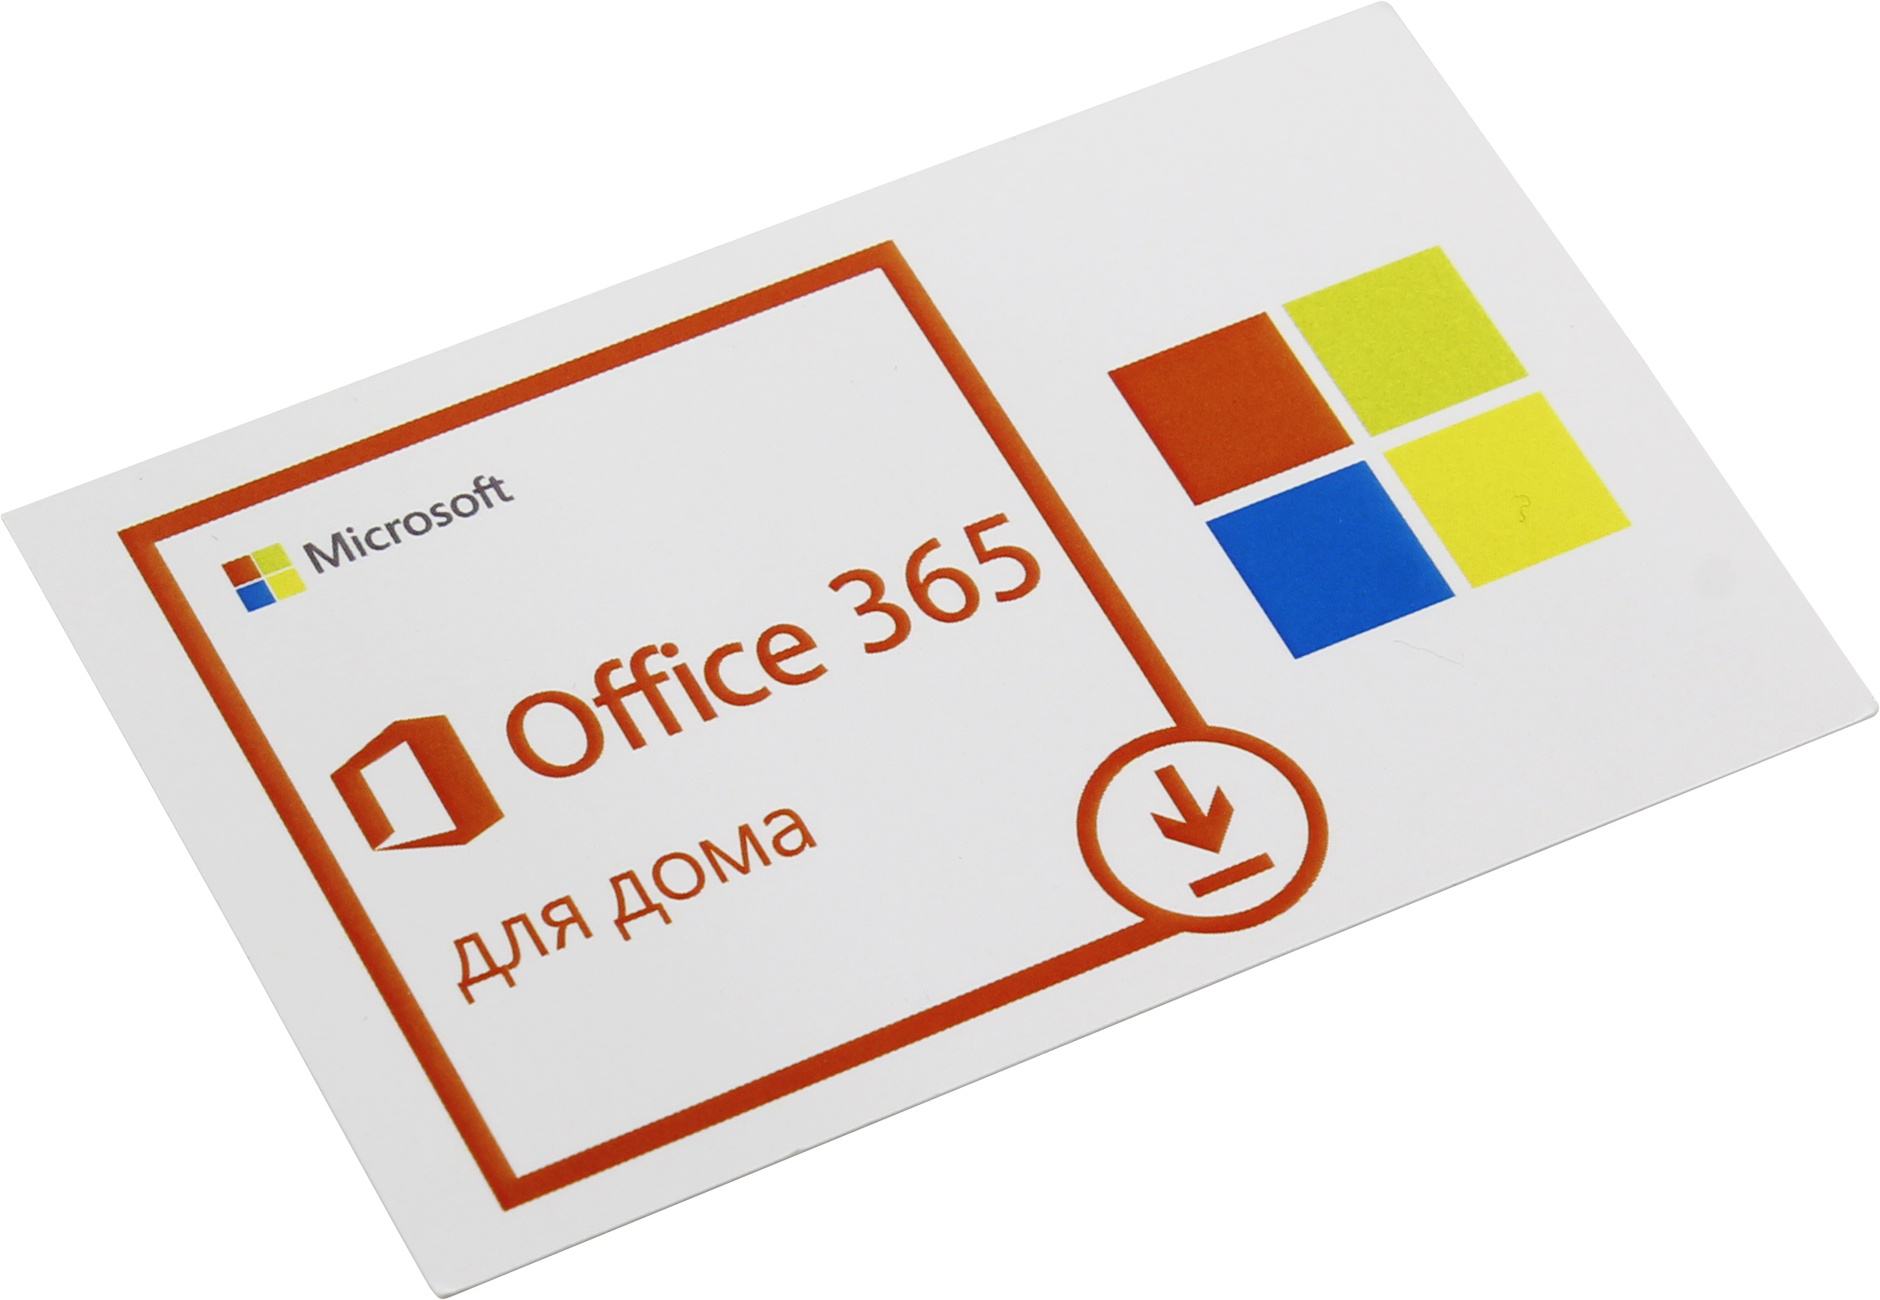 Ключ офис 365 для windows 10. Office 365 для дома. Microsoft Office 365 персональный. Microsoft Office 365 ключик активации. Ключ 365 Office personal.